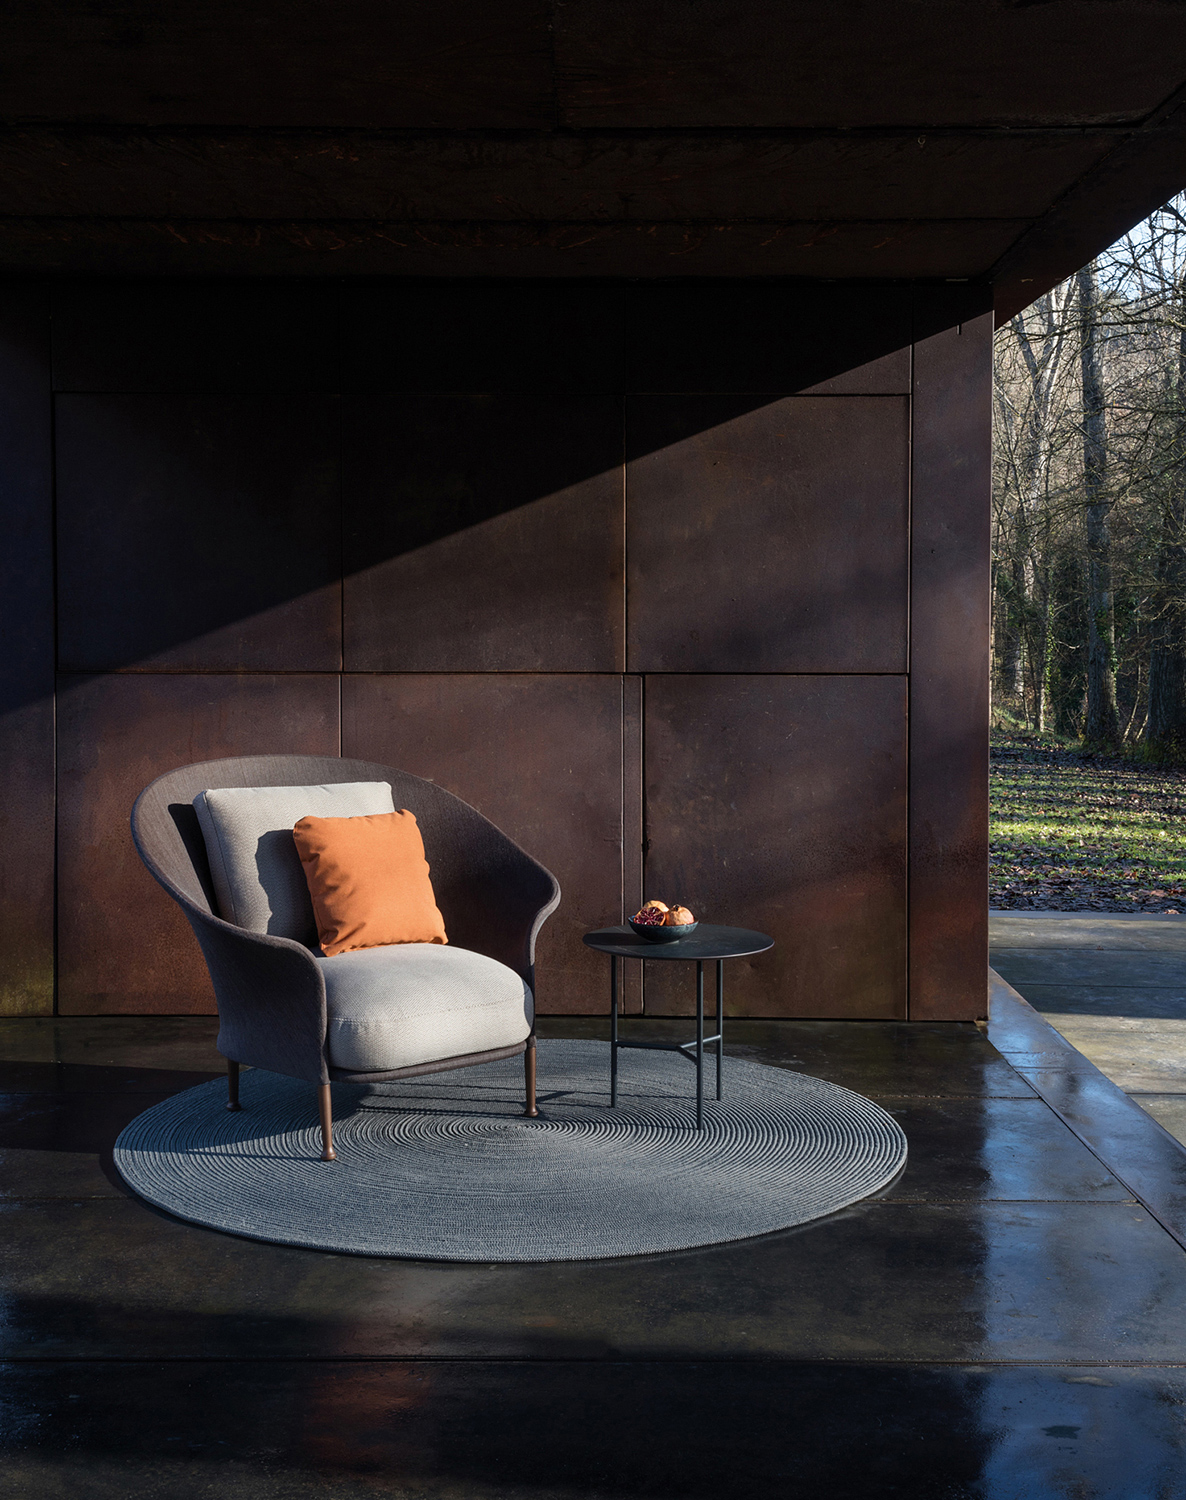 outdoor collection - armchairs - liz armchair